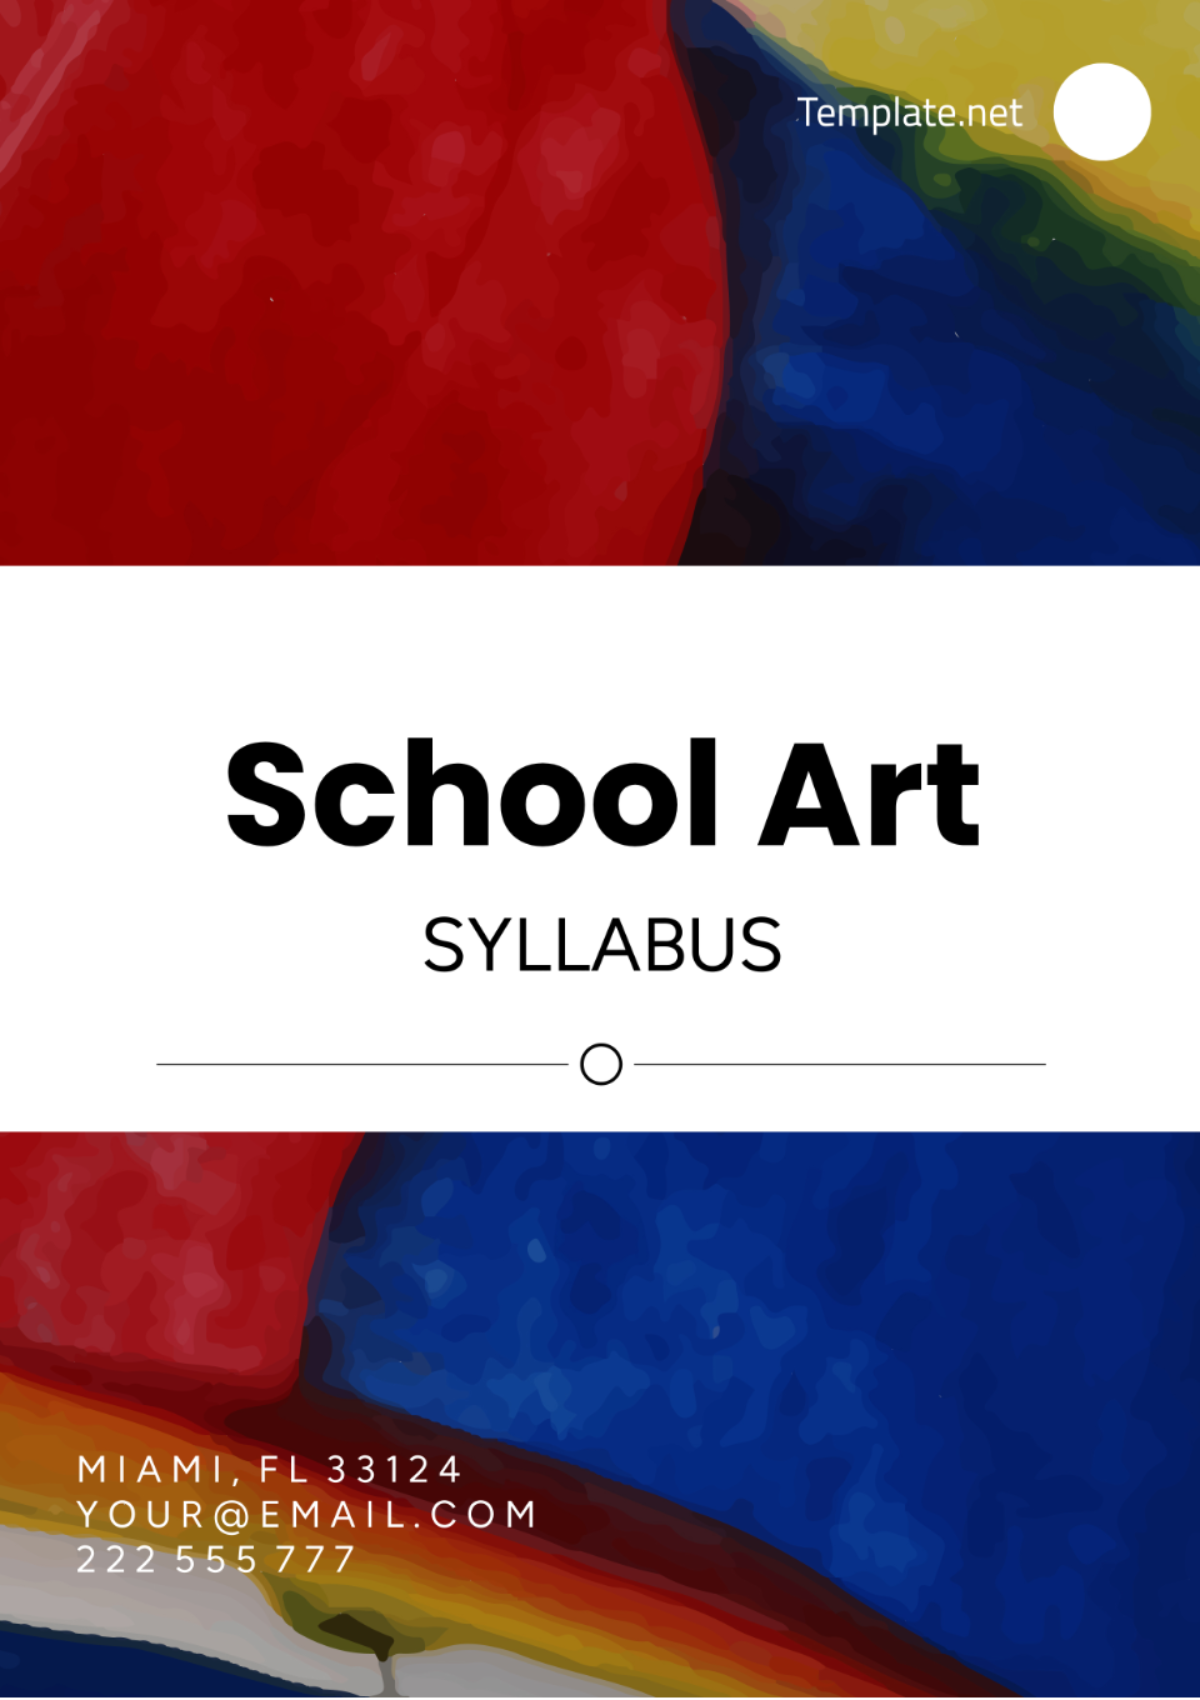 School Art Syllabus Template